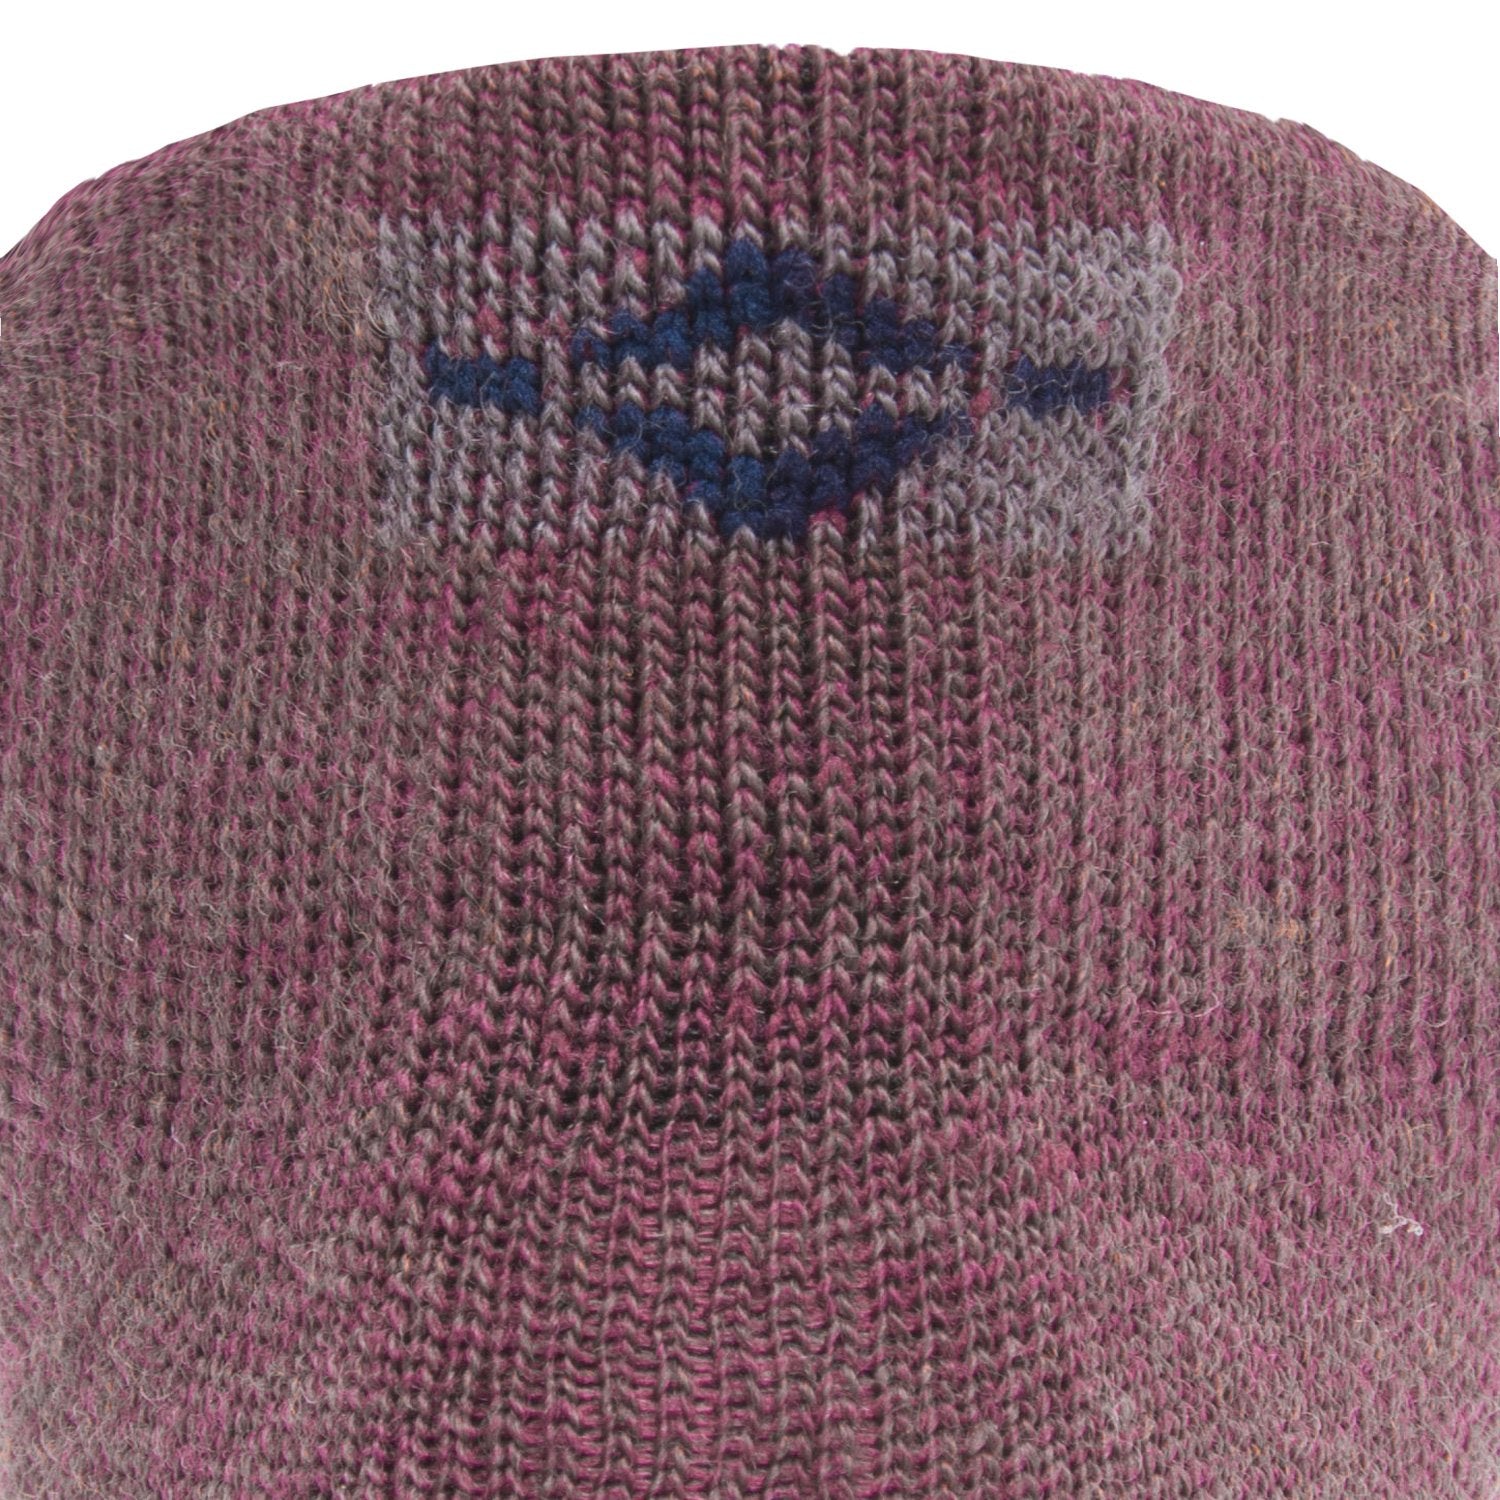 Axiom Quarter Sock With Merino Wool - Catawba Grape cuff perspective - made in The USA Wigwam Socks